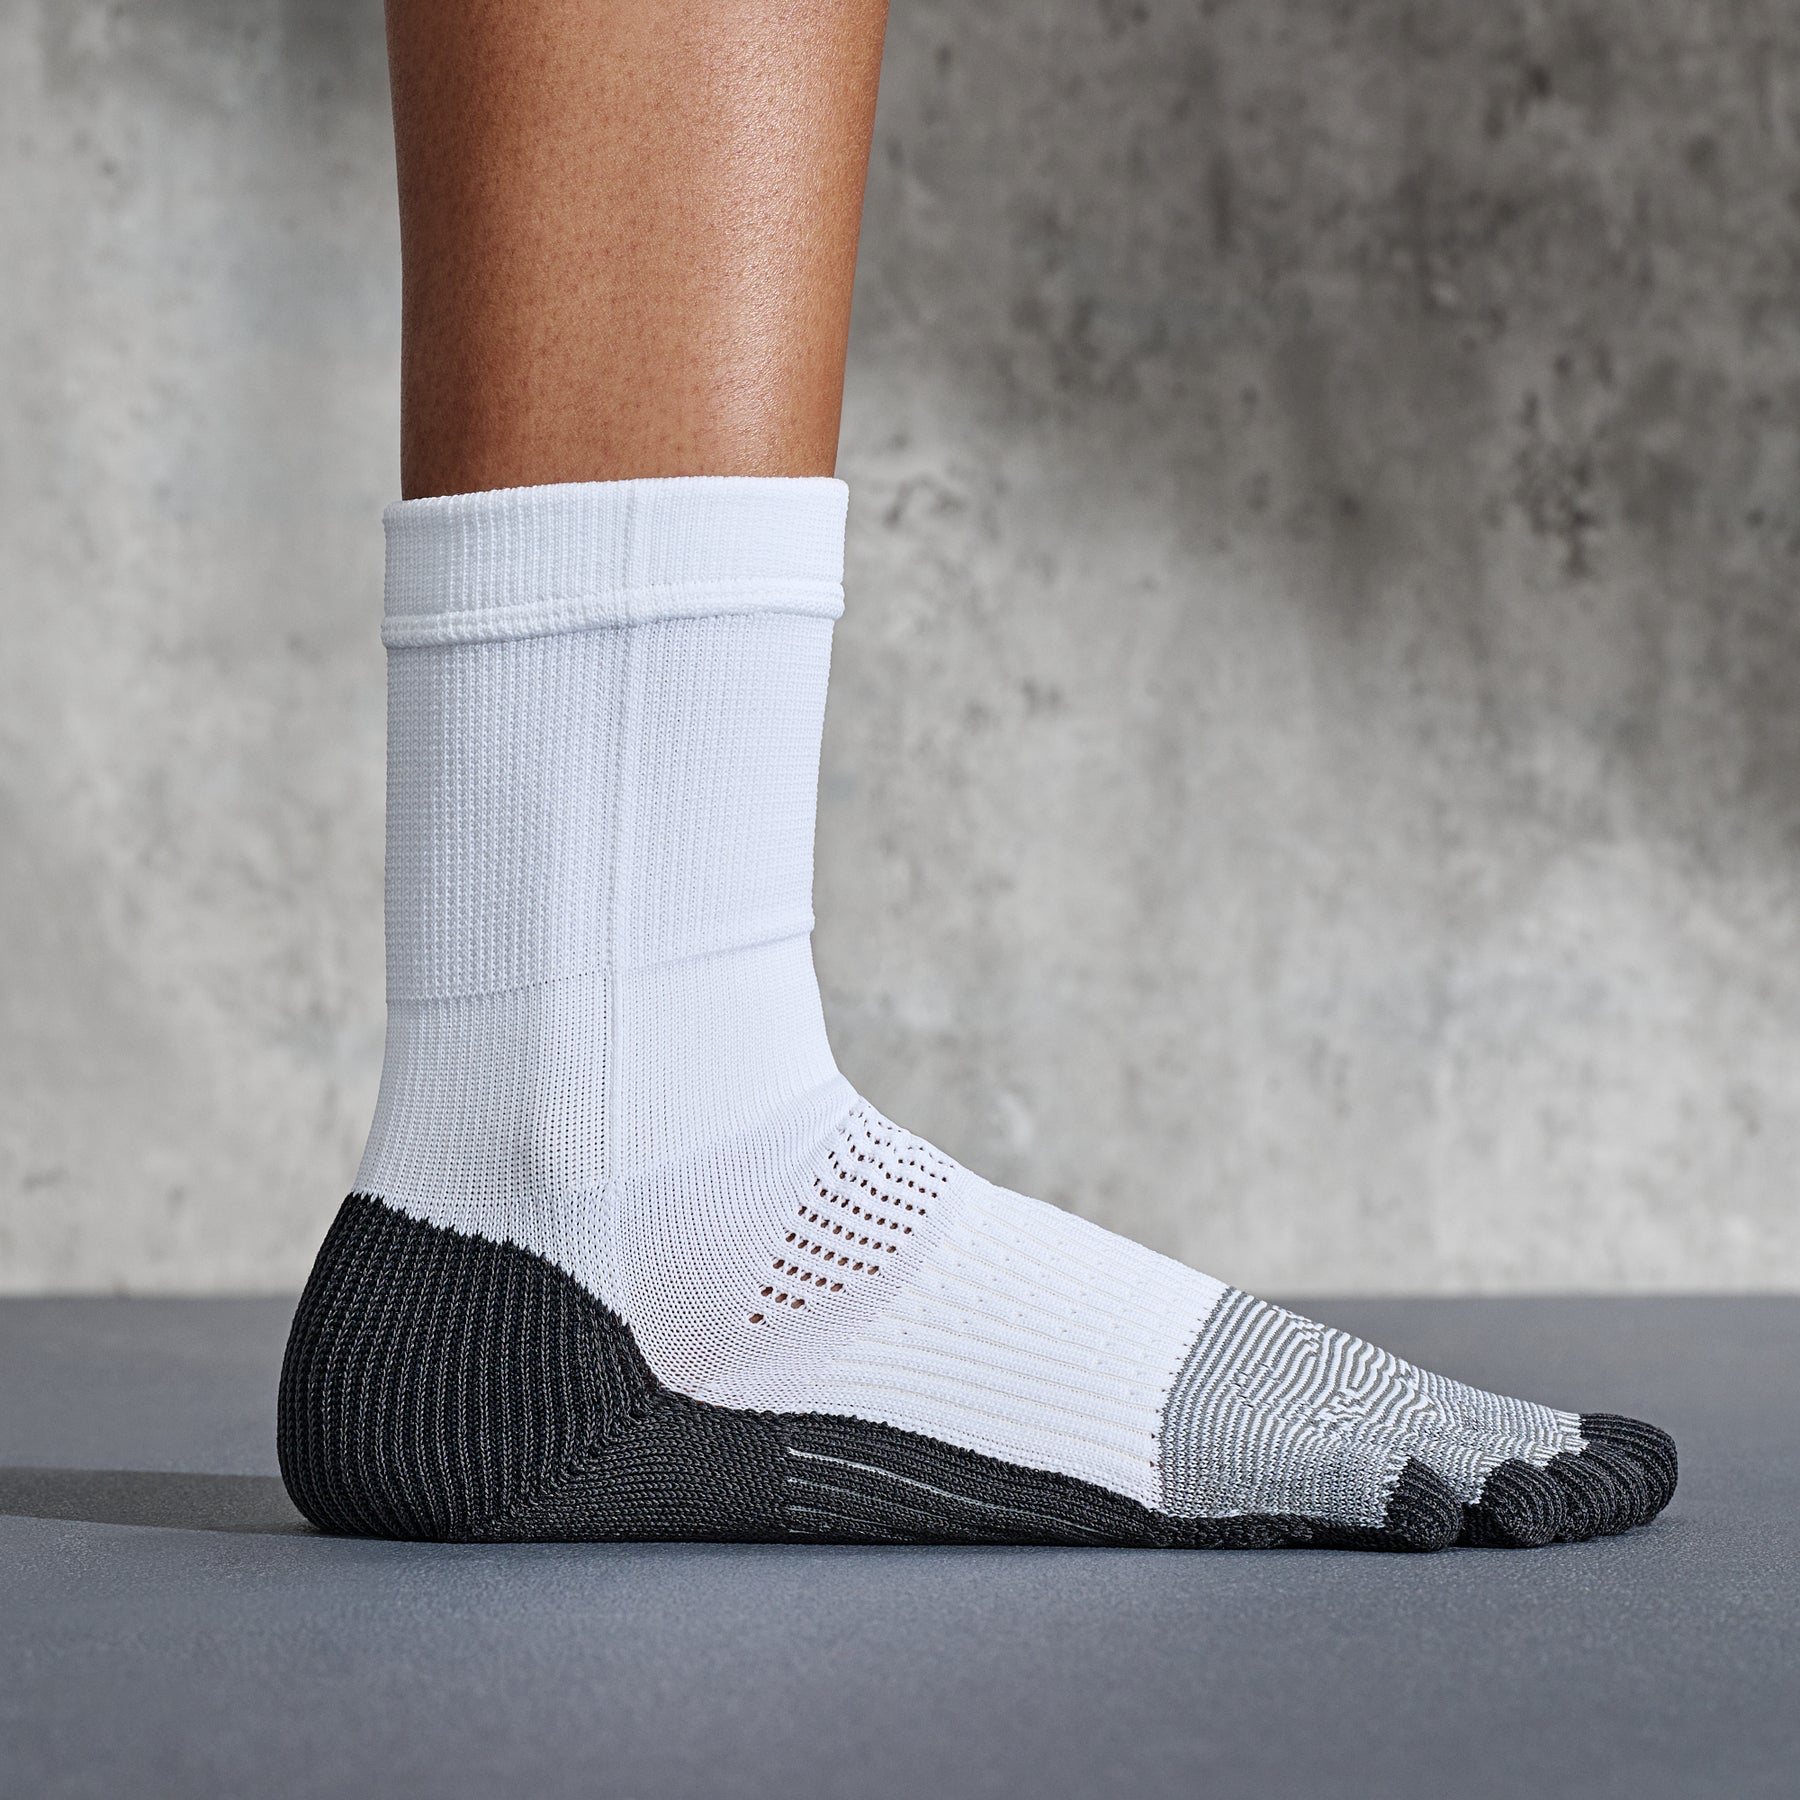 Tabio Football Toe Socks is designed to enhance your performance! ⚽️ Y